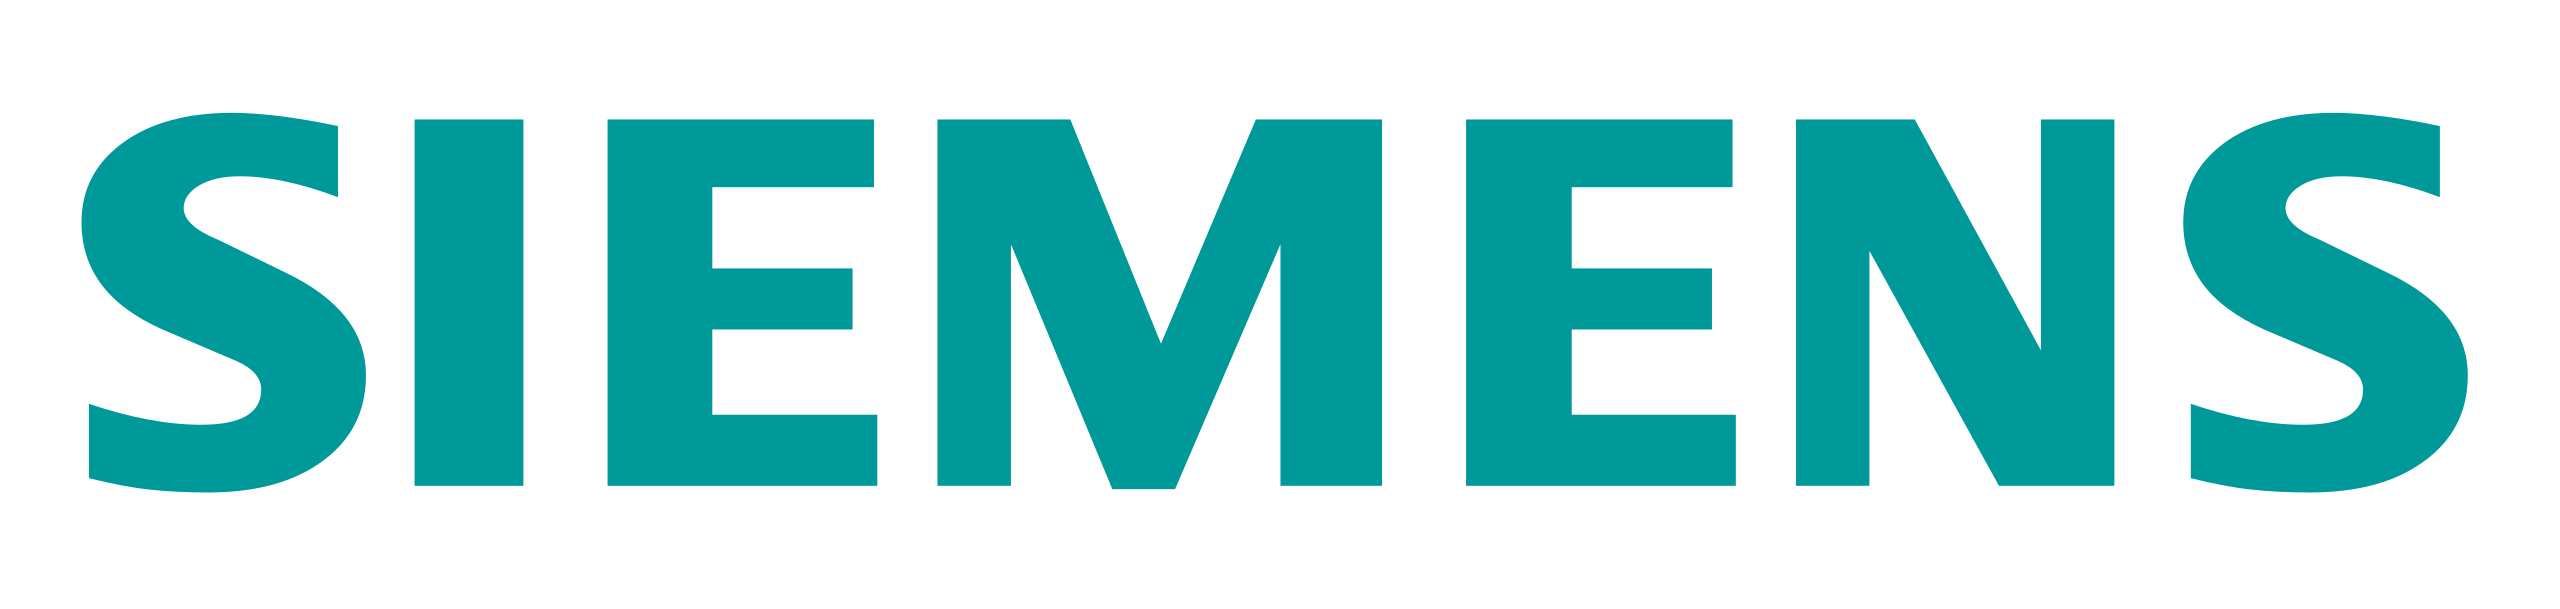 /media/clients/Siemens-logo.png Logo 